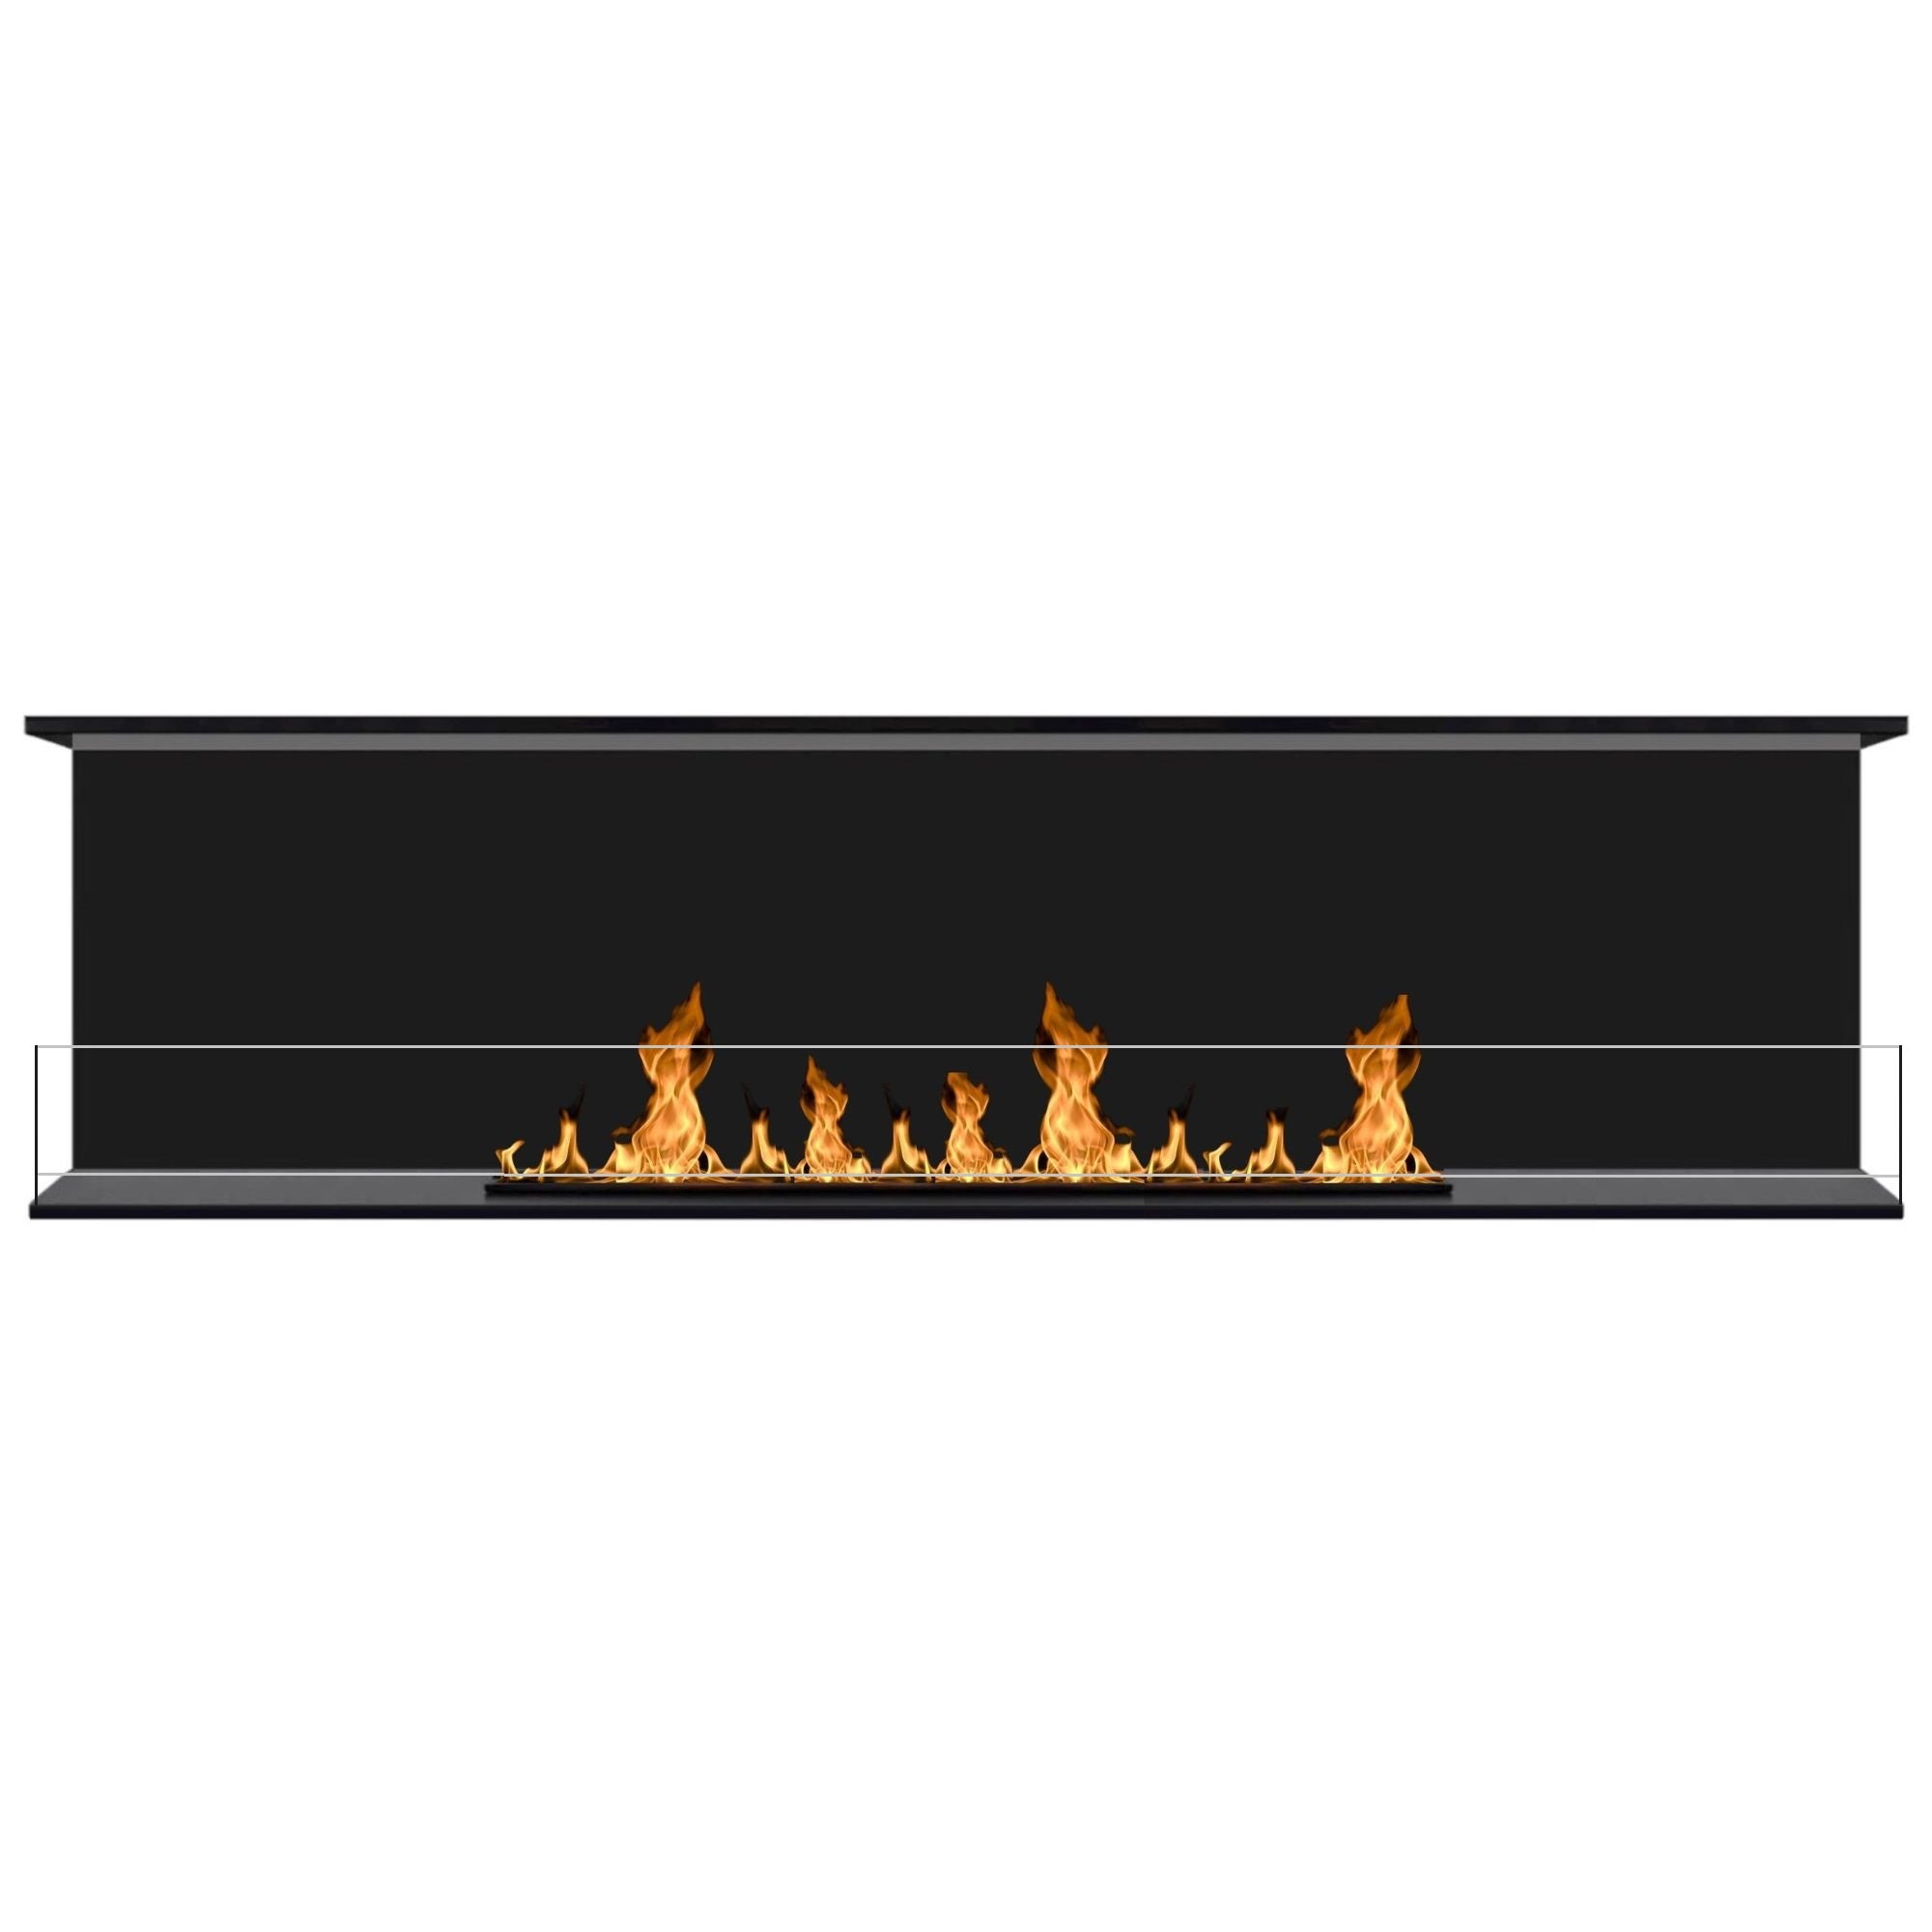 Izala Design Built-in Fireplace 171 CM